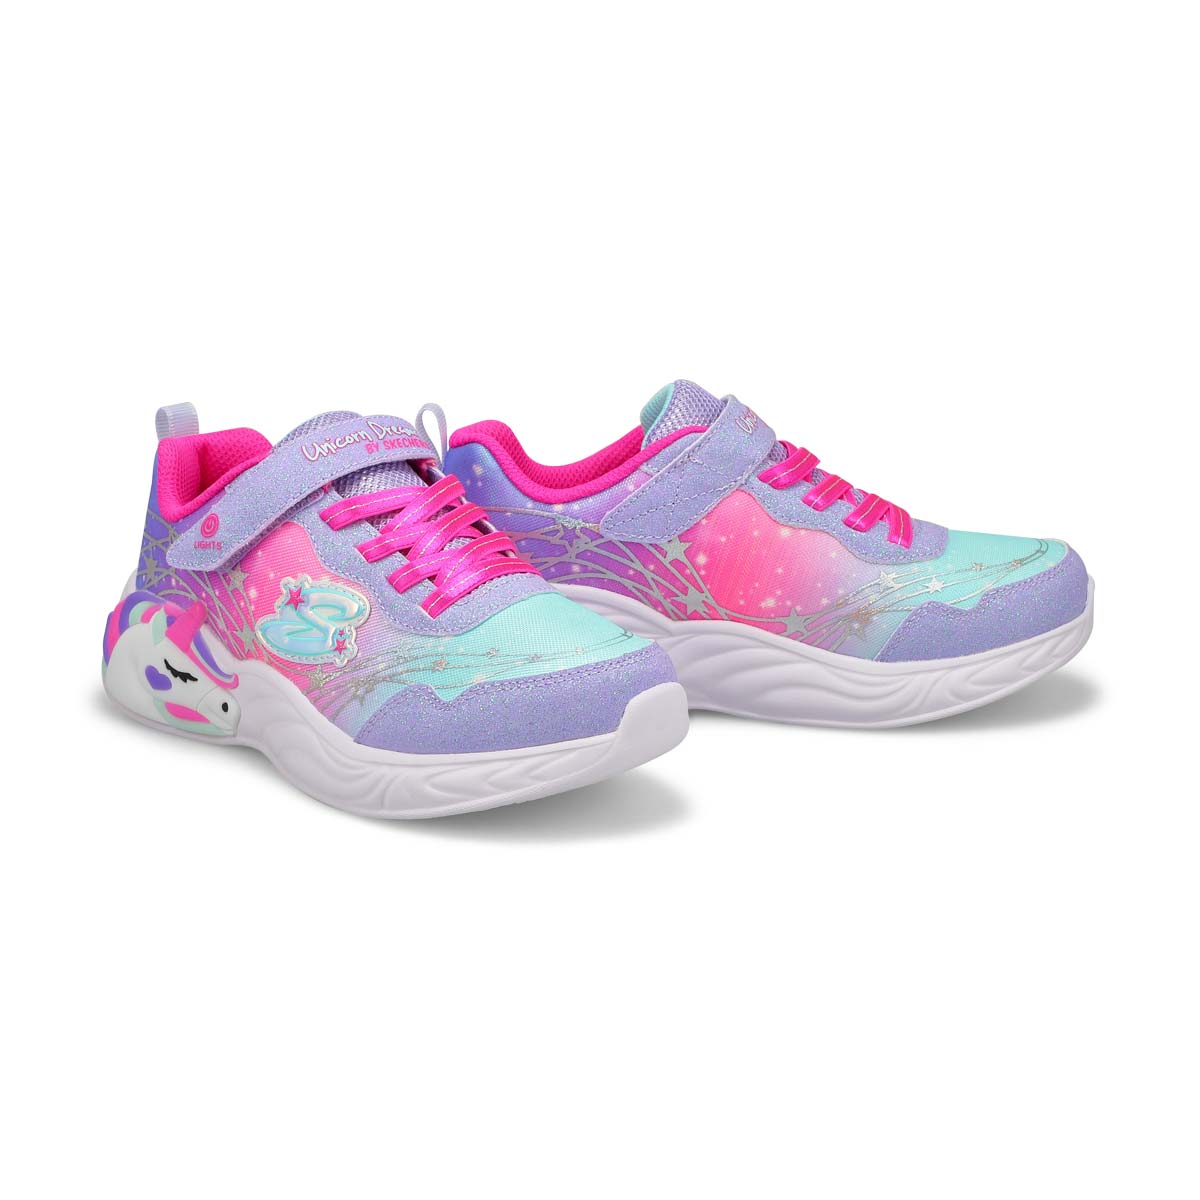 Girls' Unicorn Dreams Sneaker - Lavender/Hot Pink